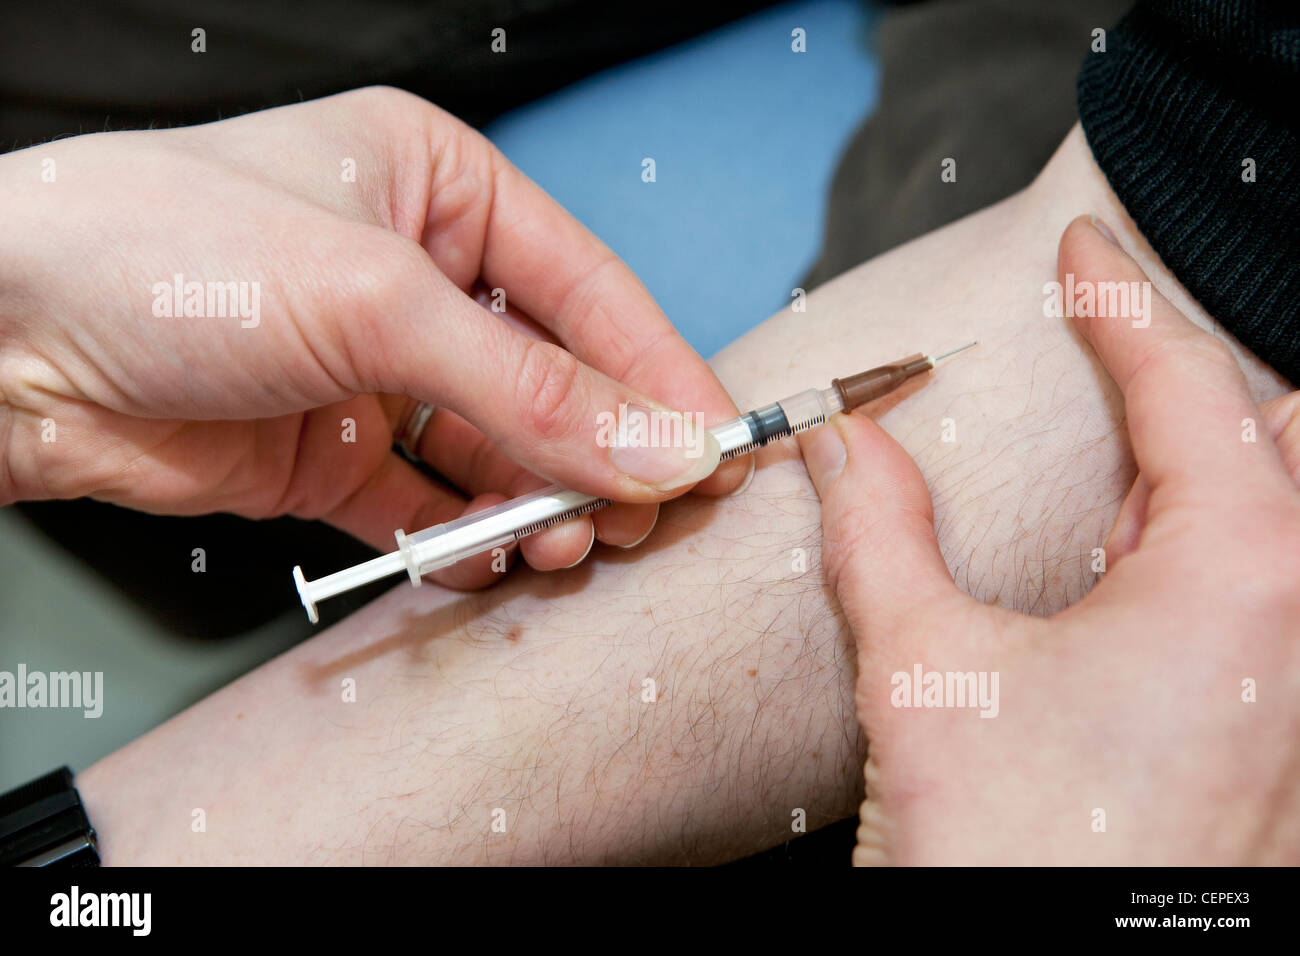 Hypodermic needle injection Stock Photo